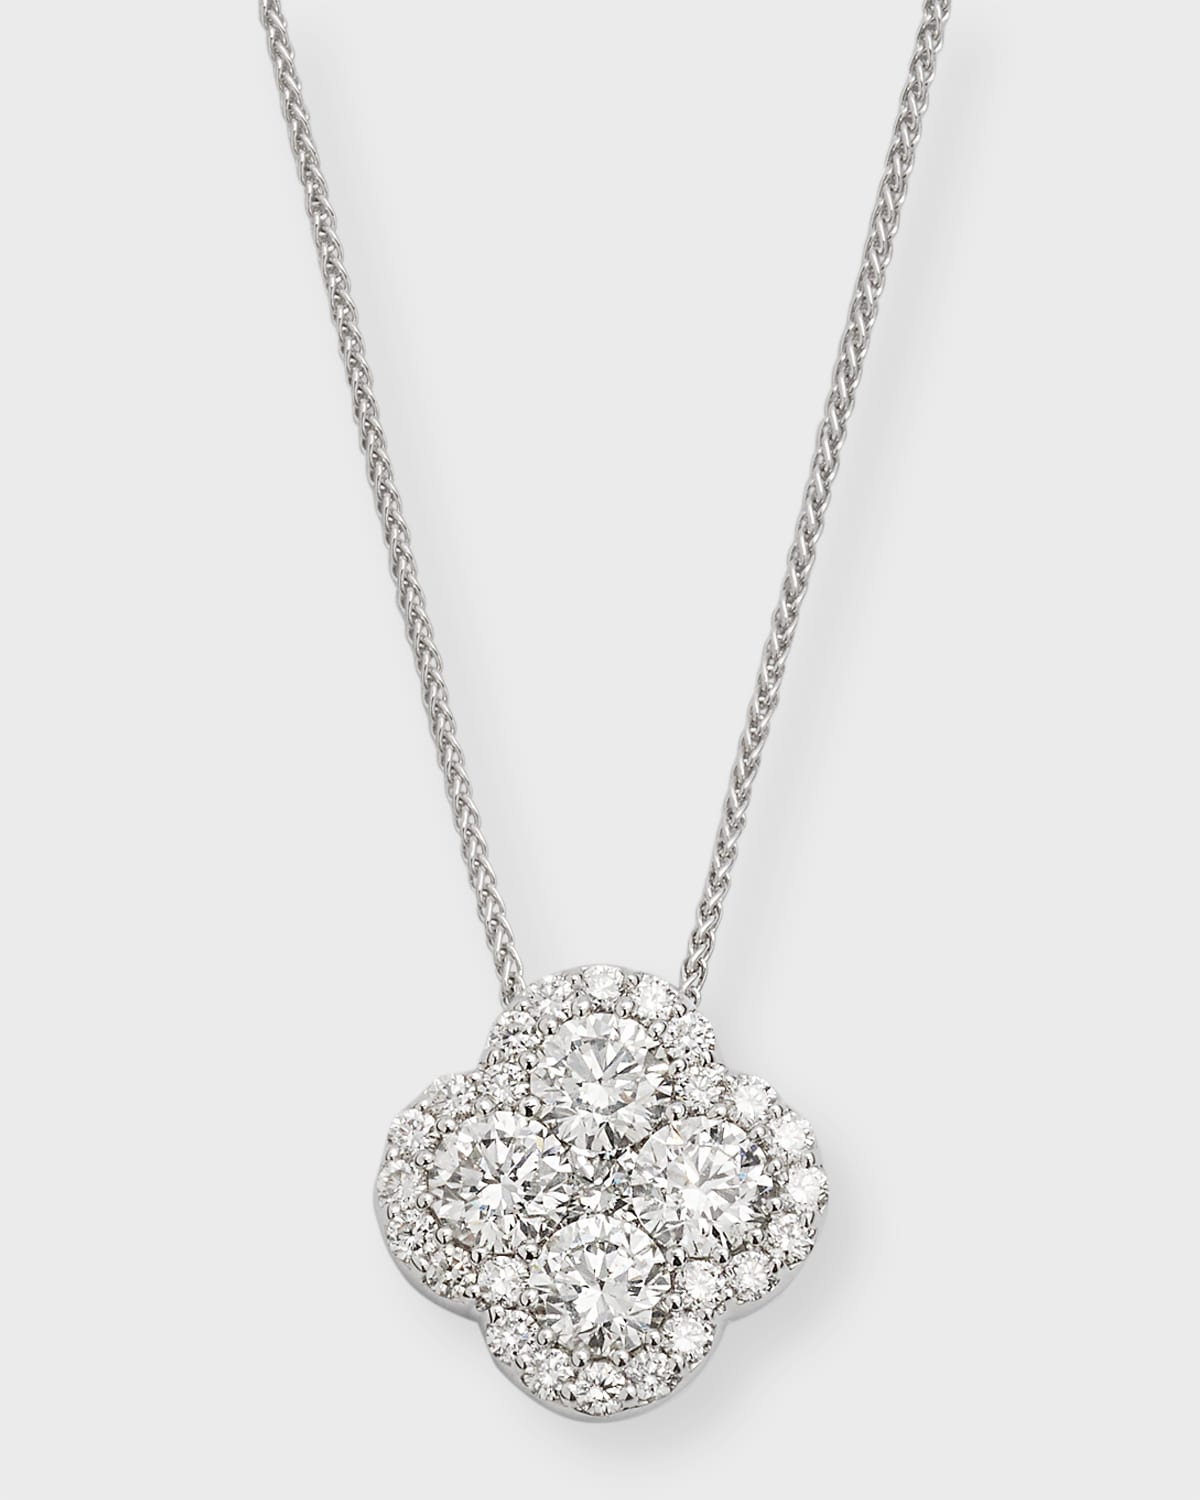 Neiman Marcus Diamonds 18k White Gold Diamond Pendant Necklace